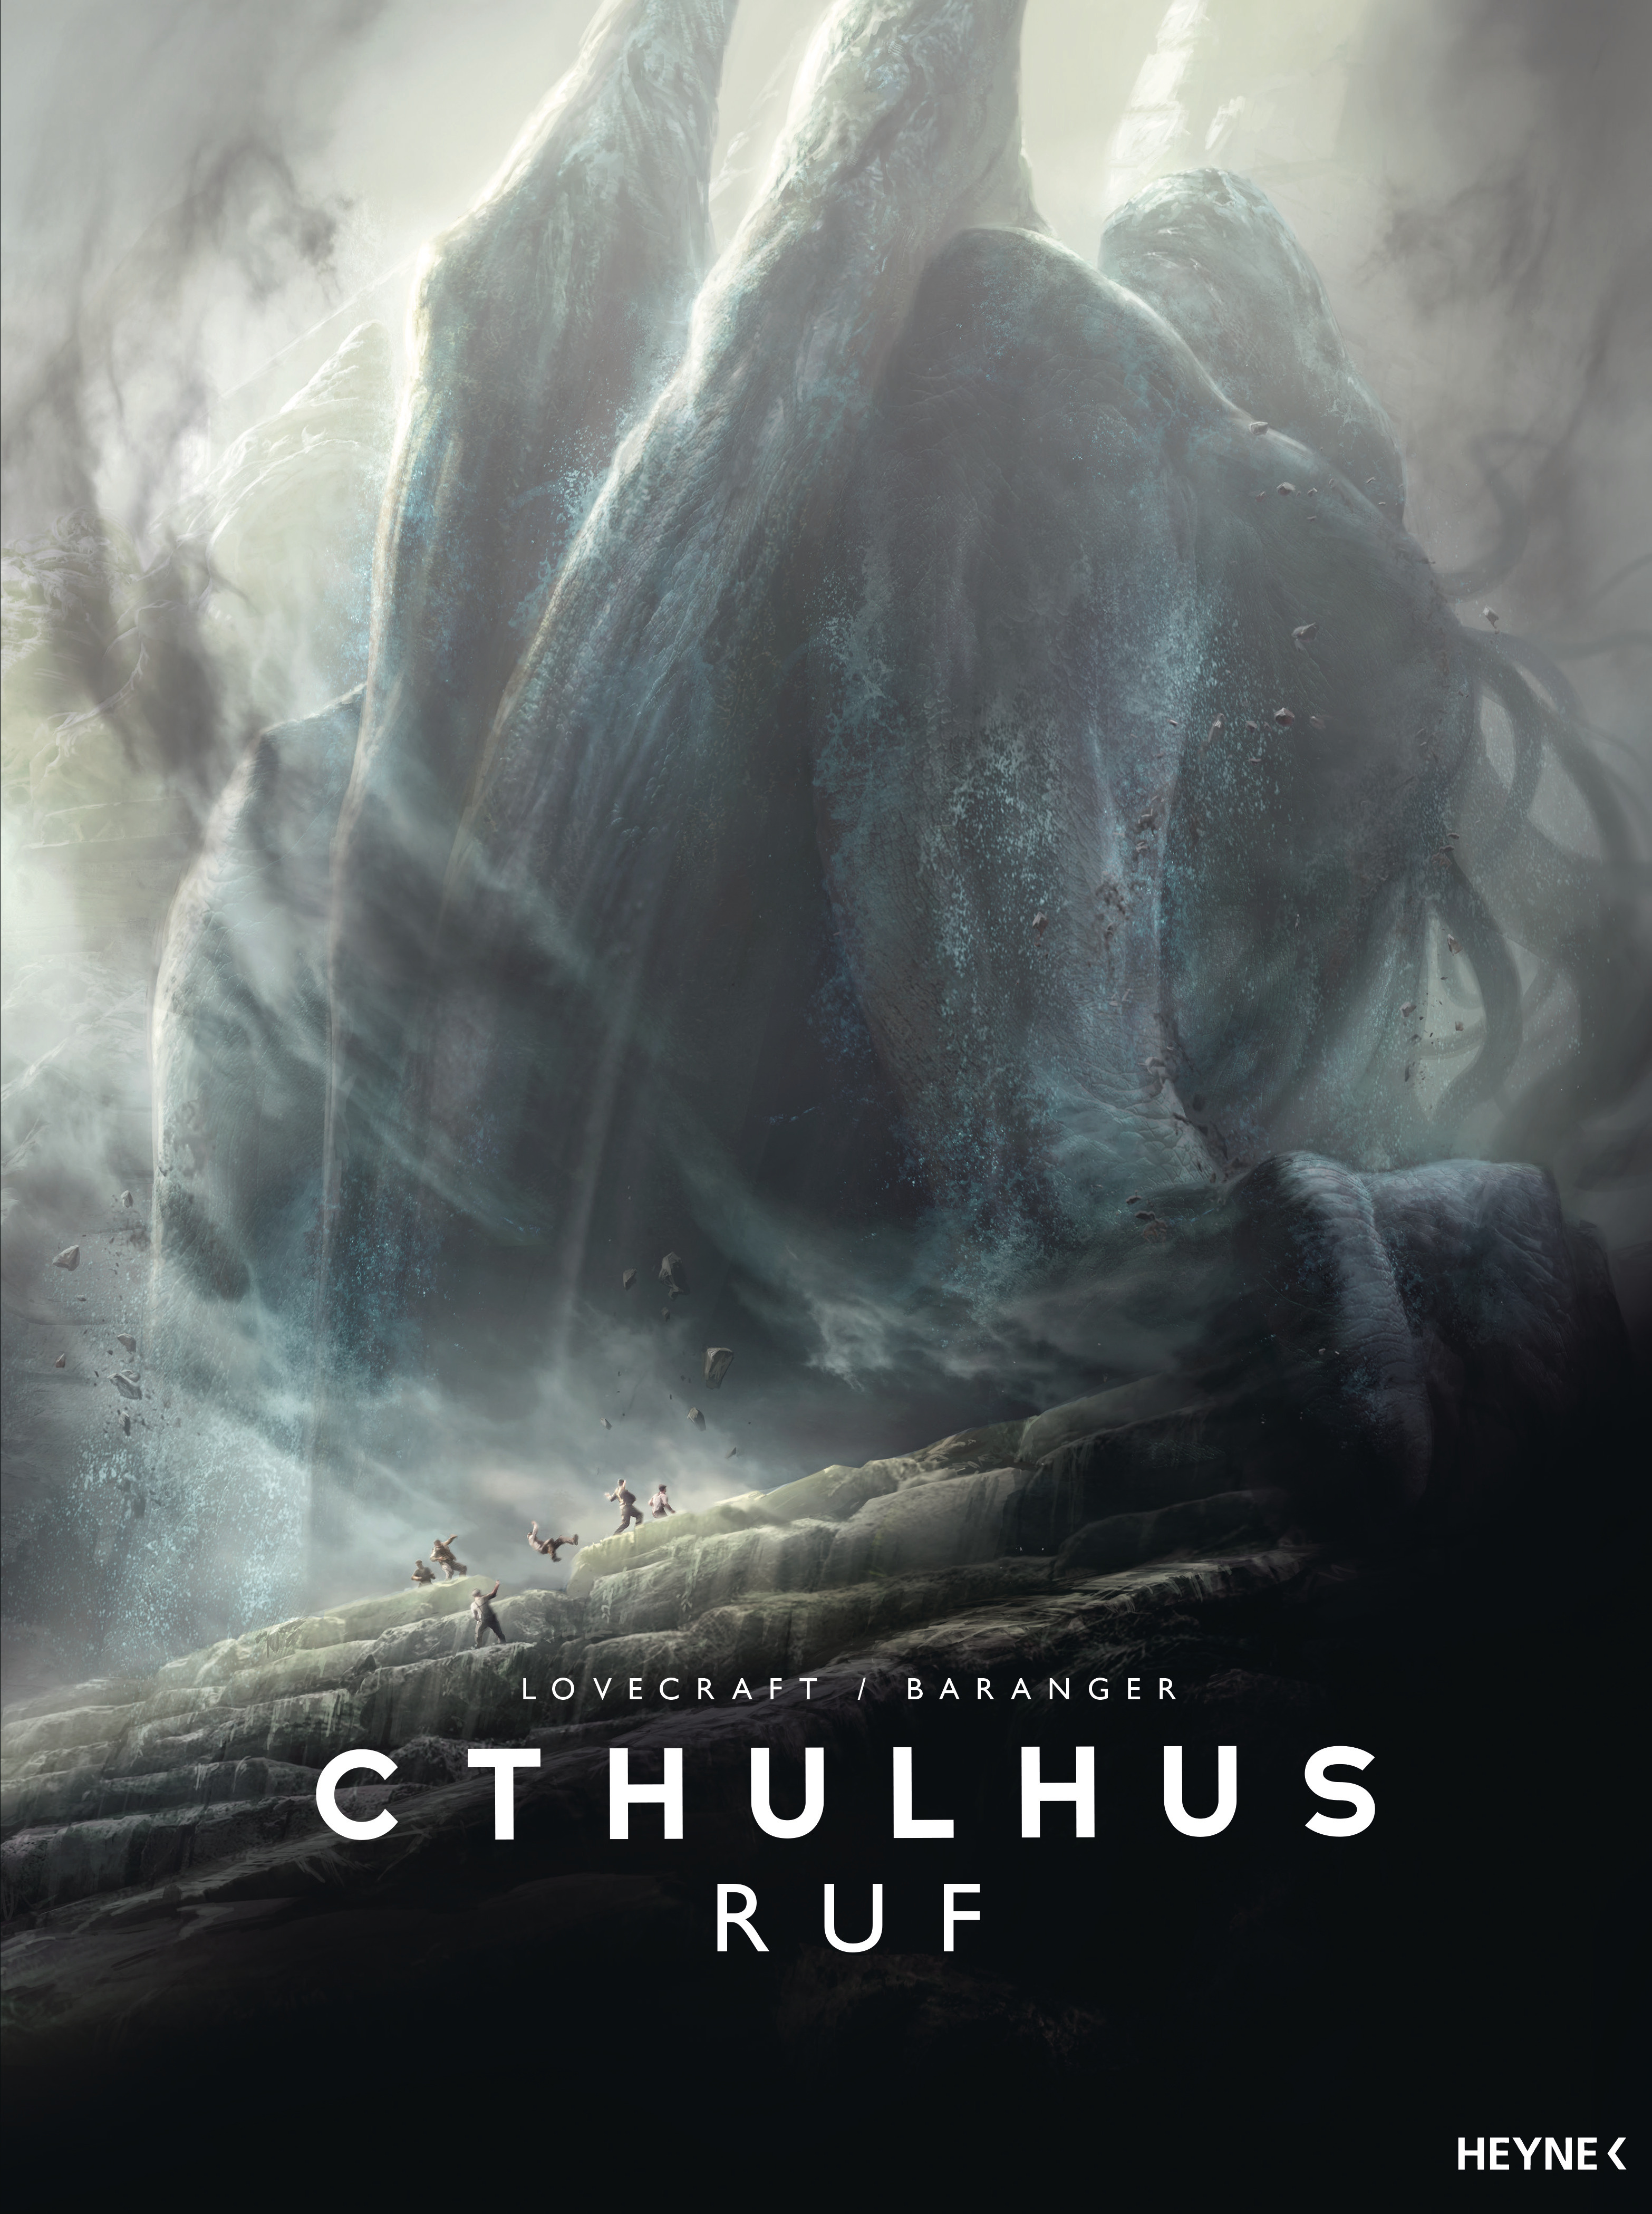 H. P. Lovecraft: Cthulhus Ruf (illustriert von François Baranger)